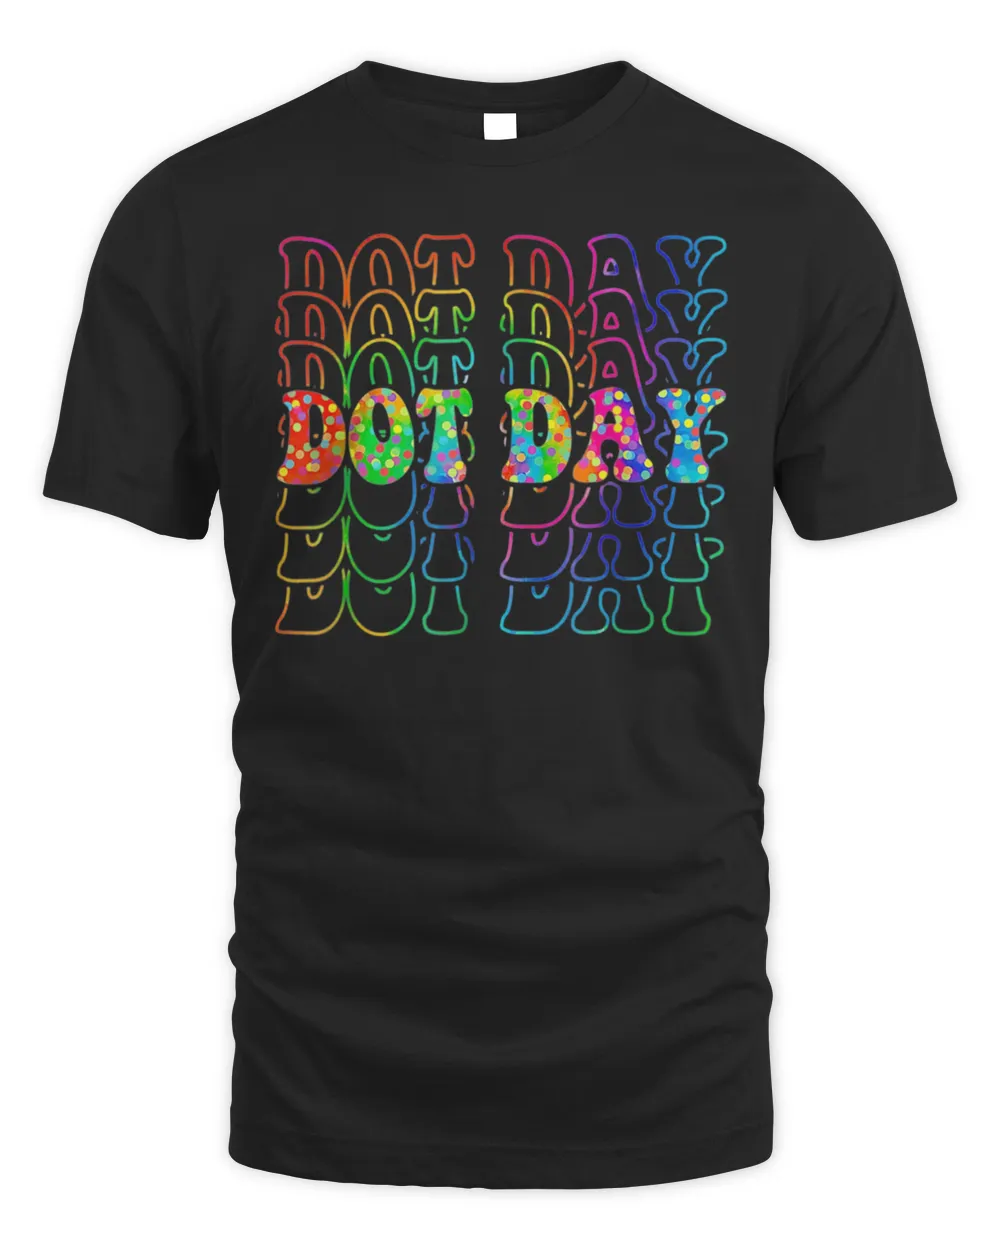 Happy Dot Day 2022 International Dot Day T-Shirt